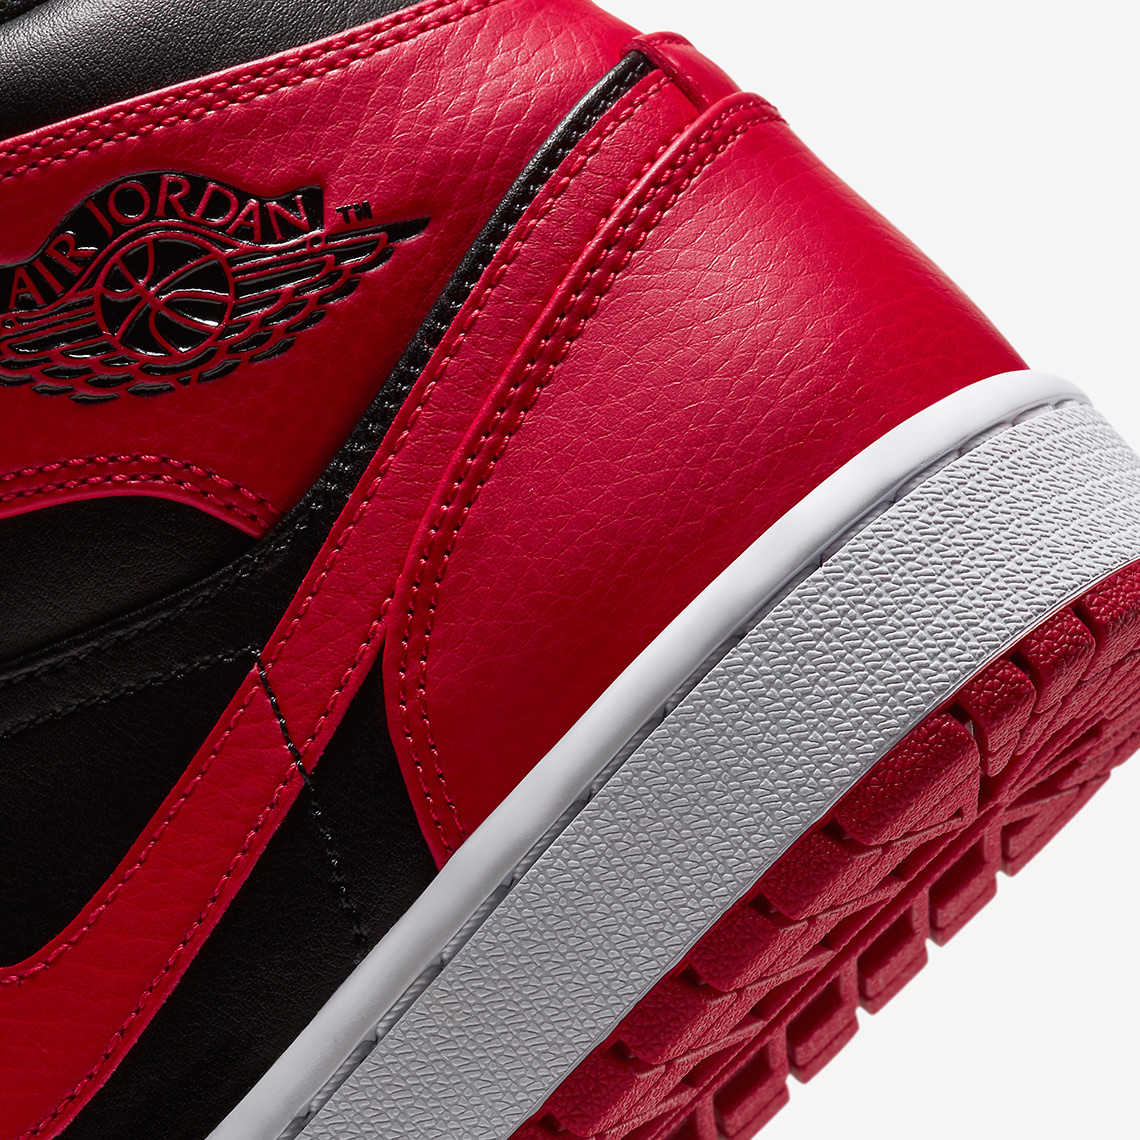 Air Jordan 1 Mid Banned 554724-074 Where To Buy | SneakerNews.com